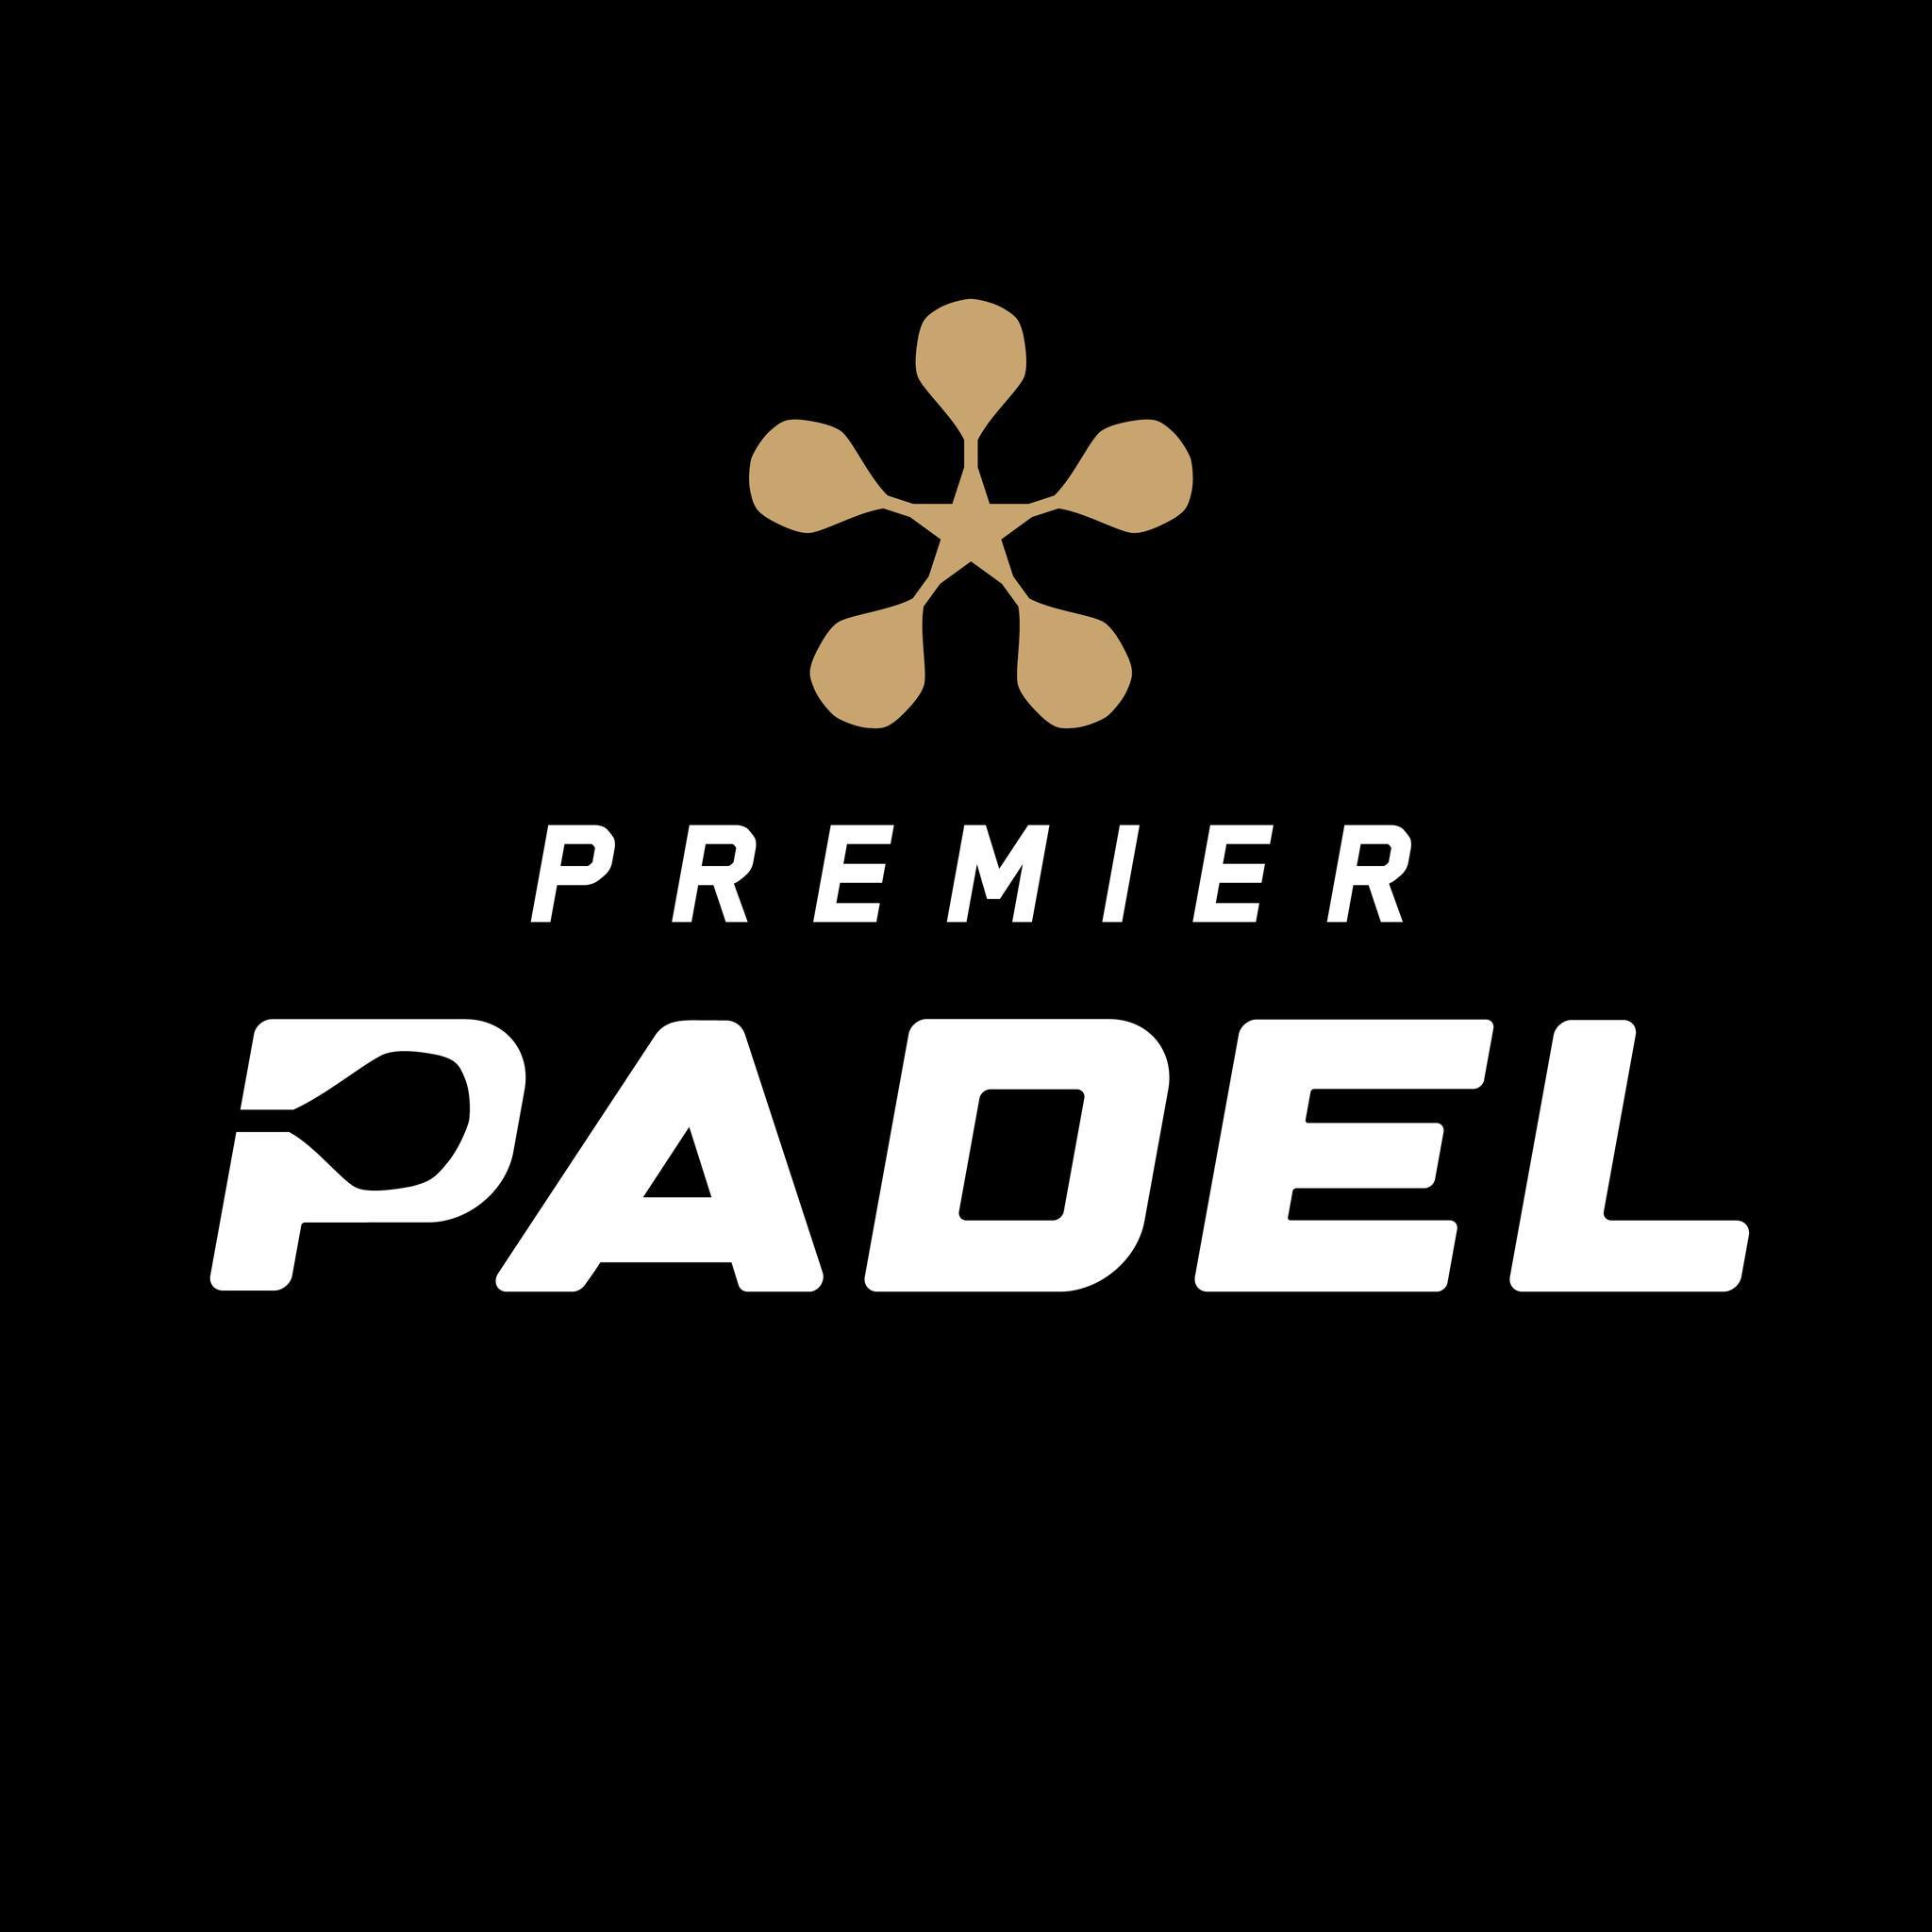 Premier Padel Logotyp